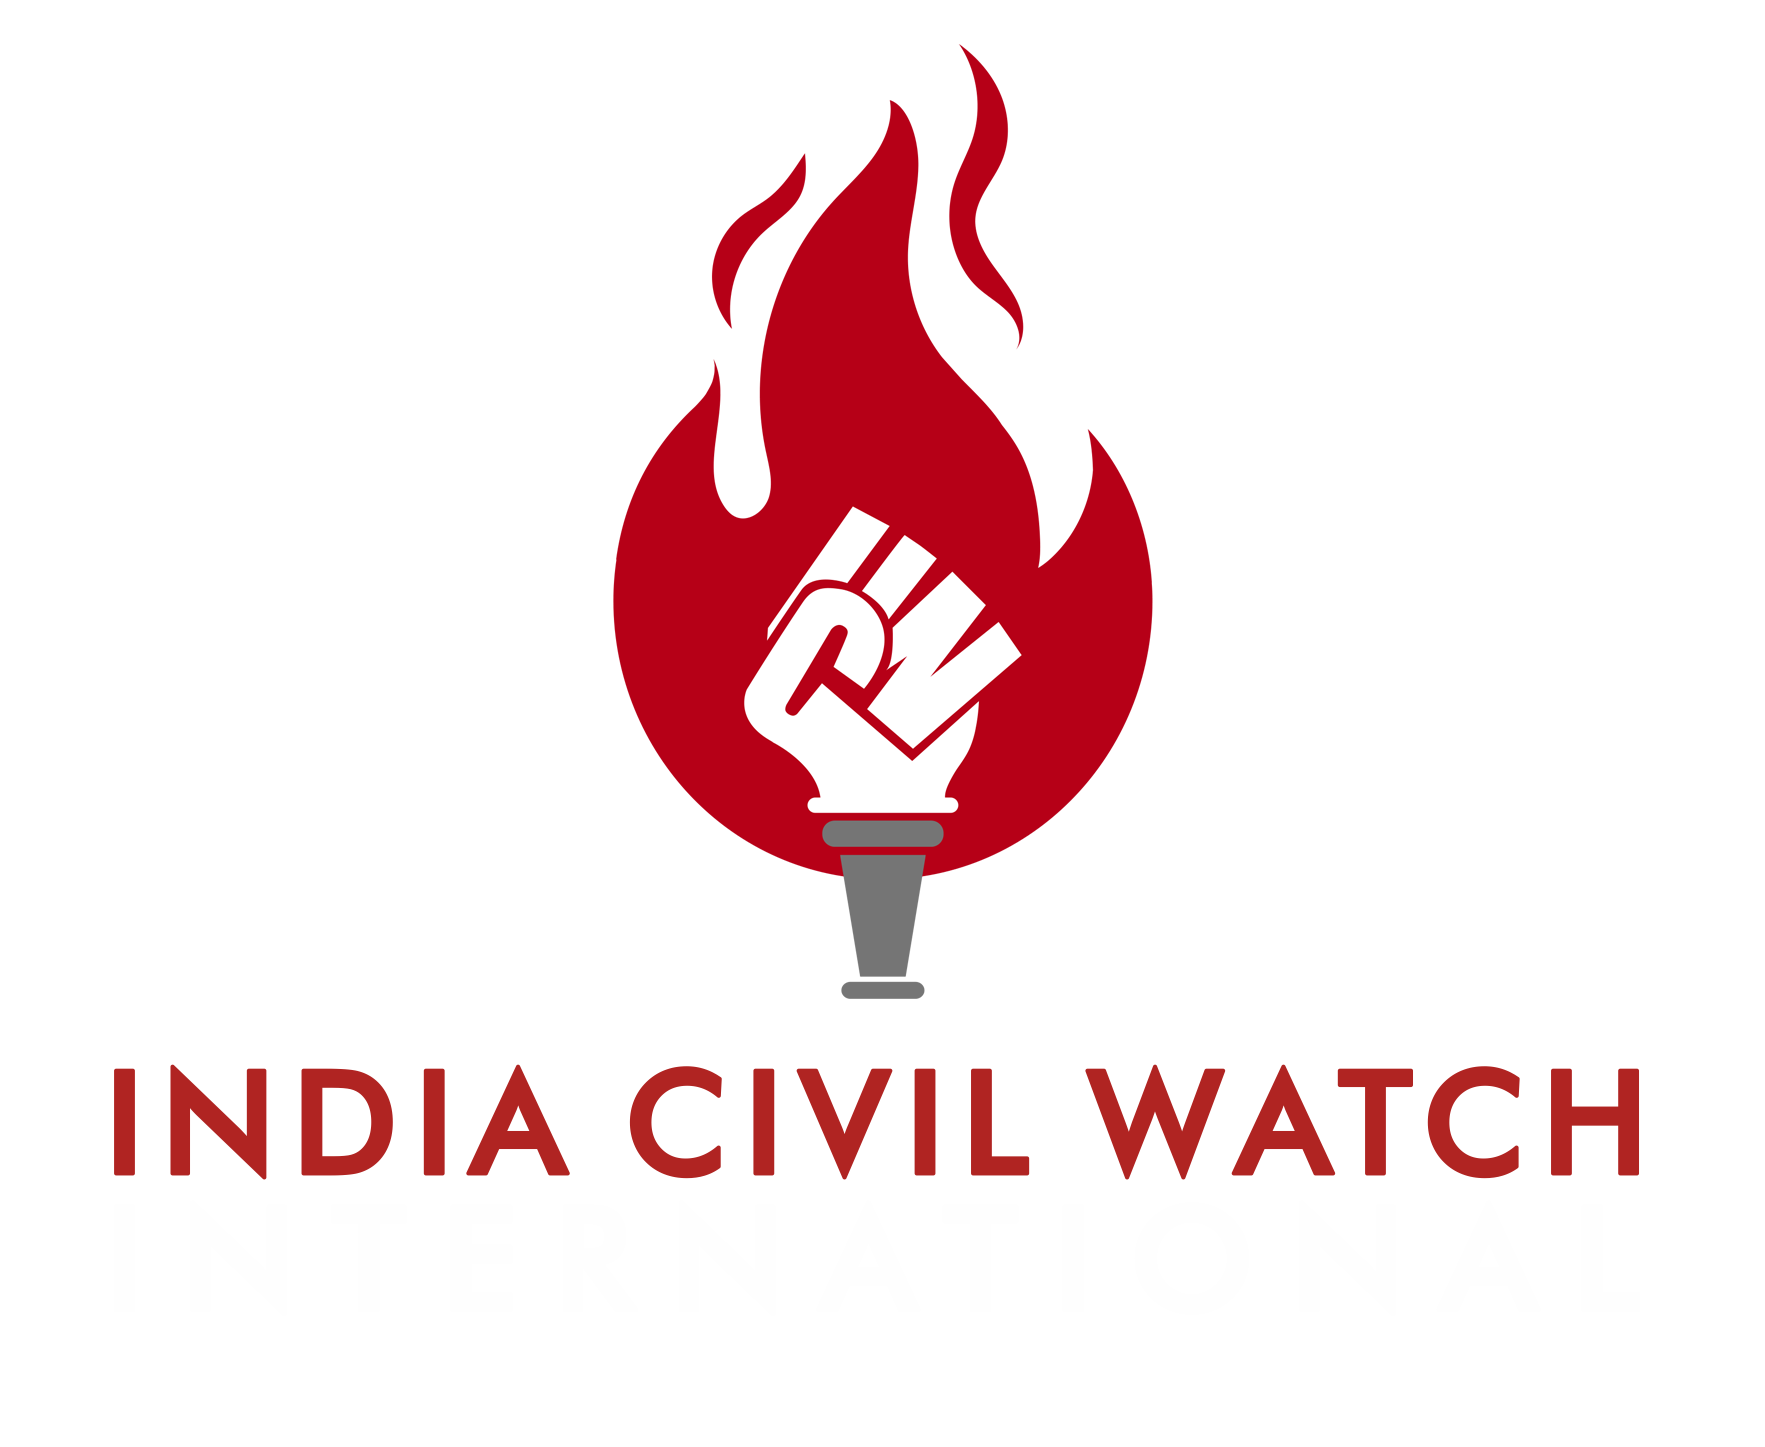 India Civil Watch International (ICWI)